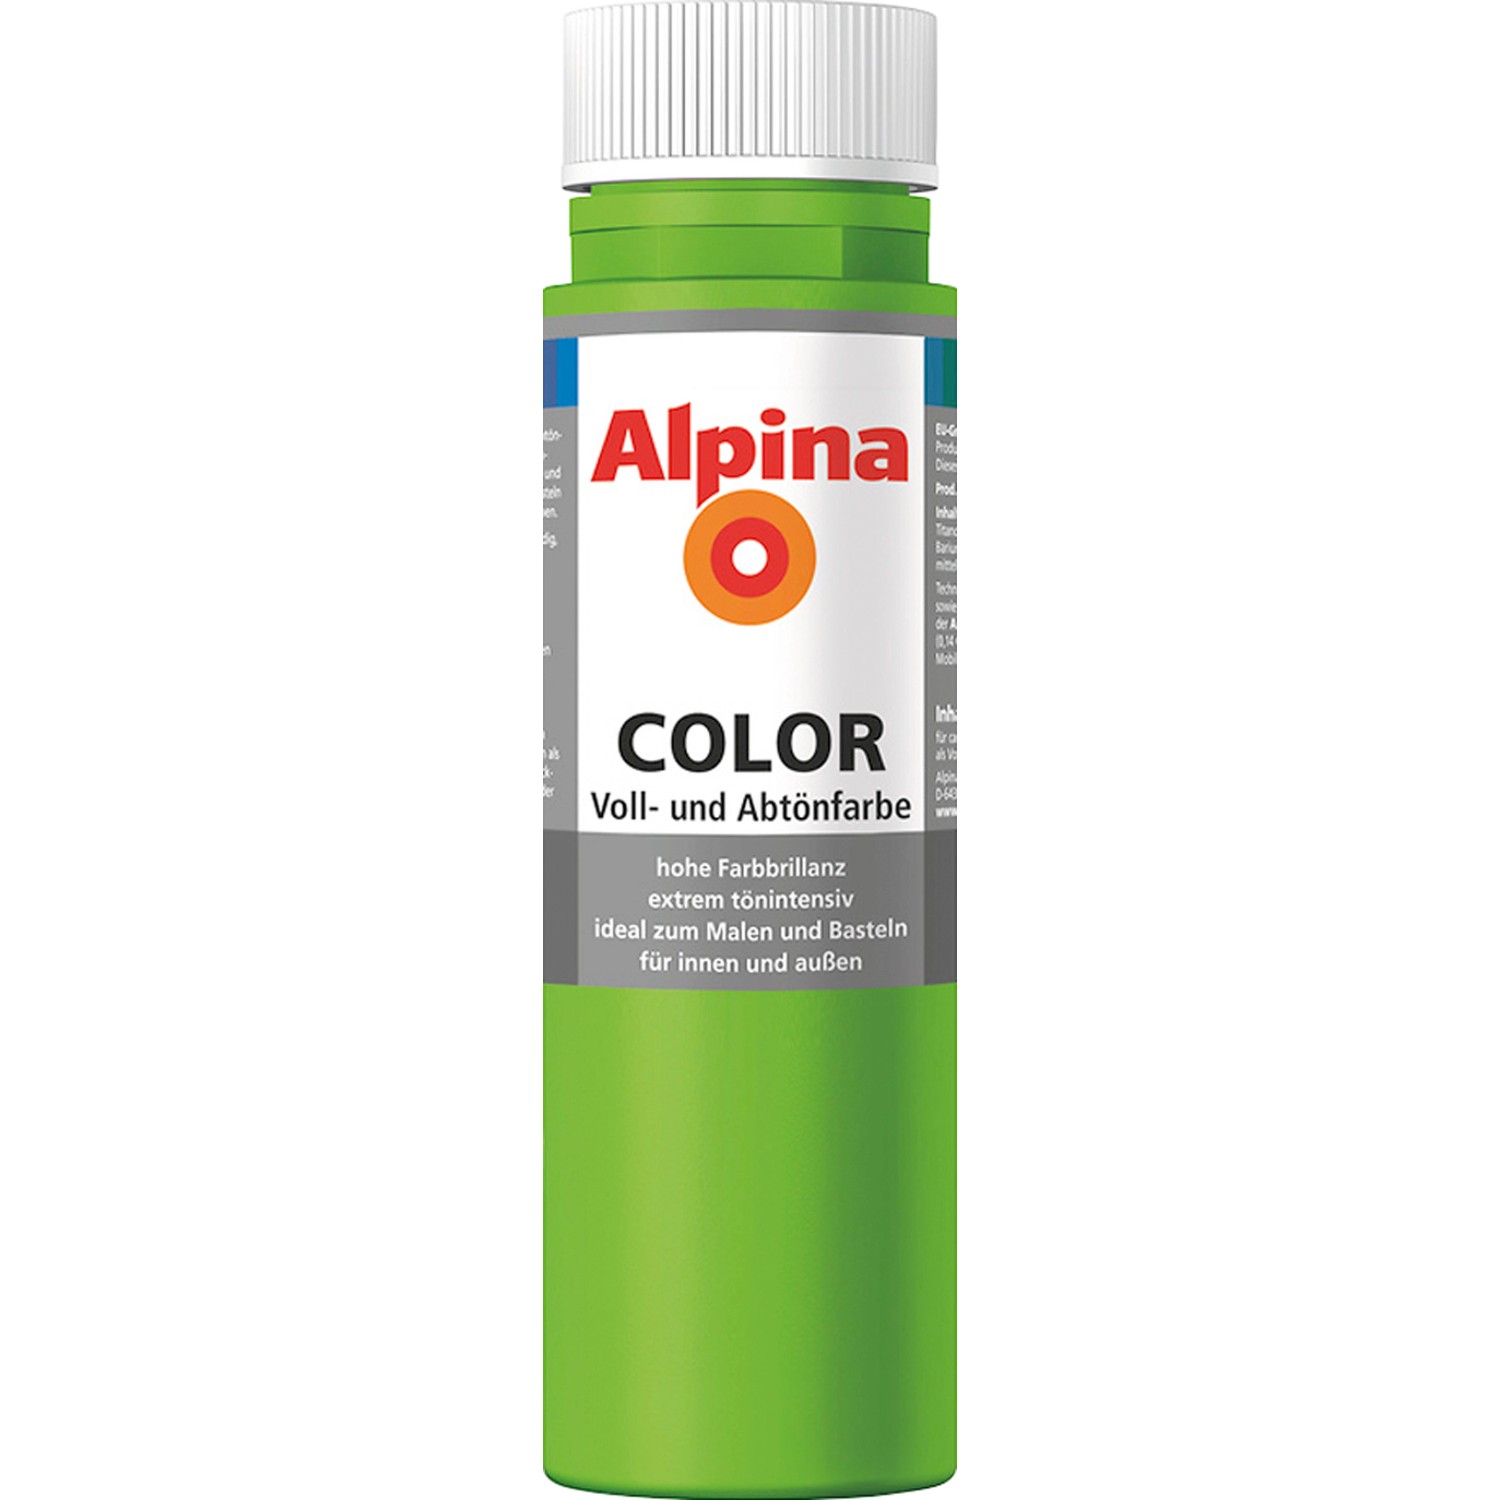 Alpina Color Grass Green seidenmatt 250 ml von Alpina